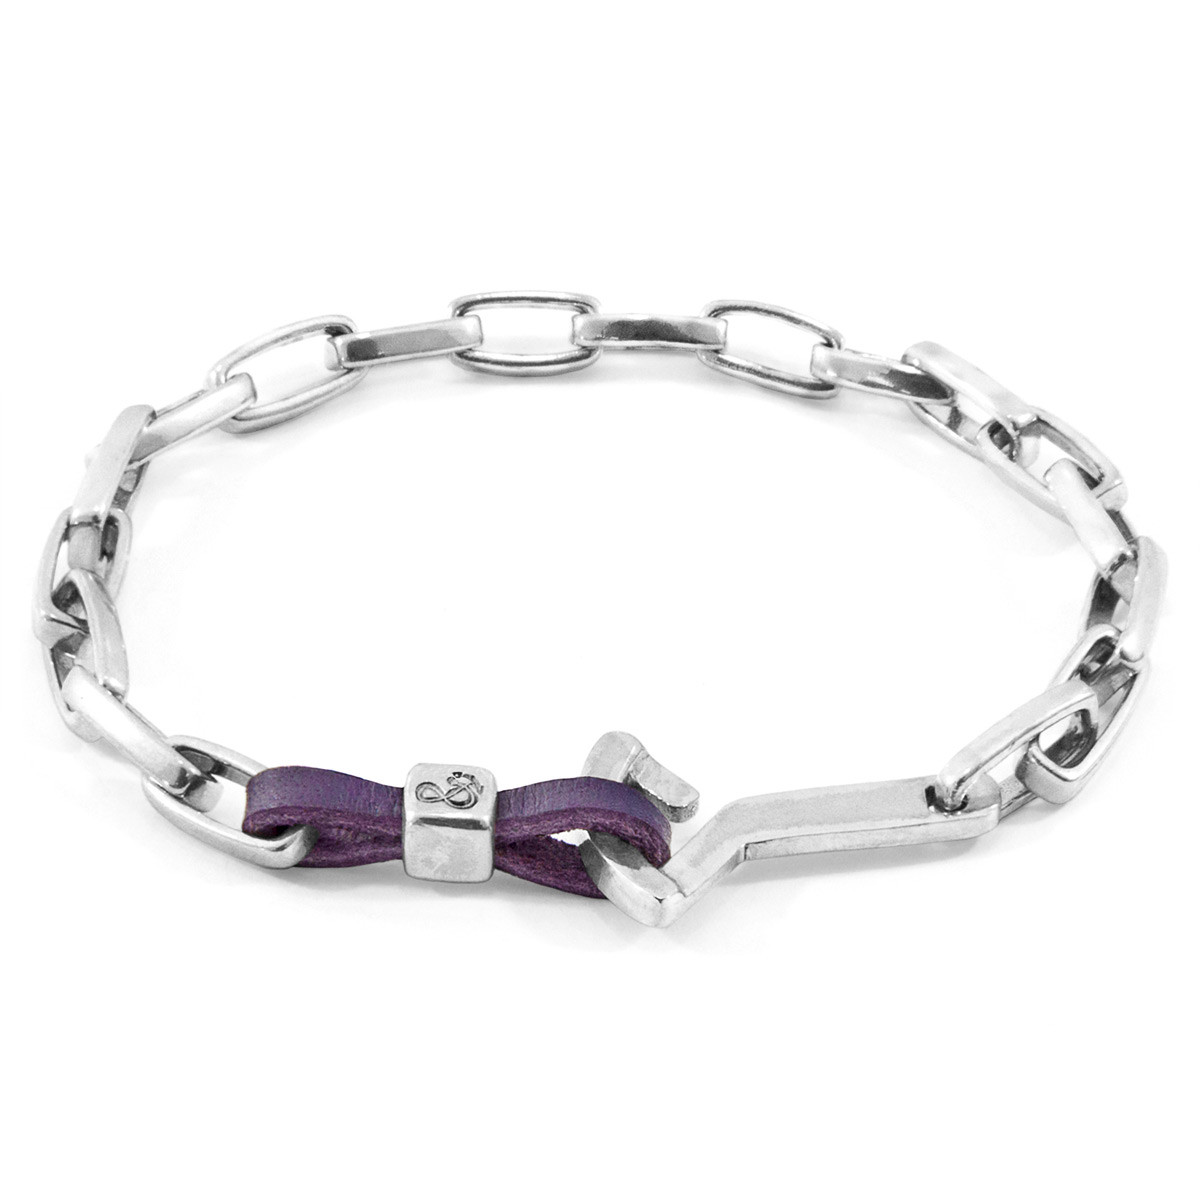 Anchor & Crew Grape Purple Frigate Silver and Flat Leather Bracelet